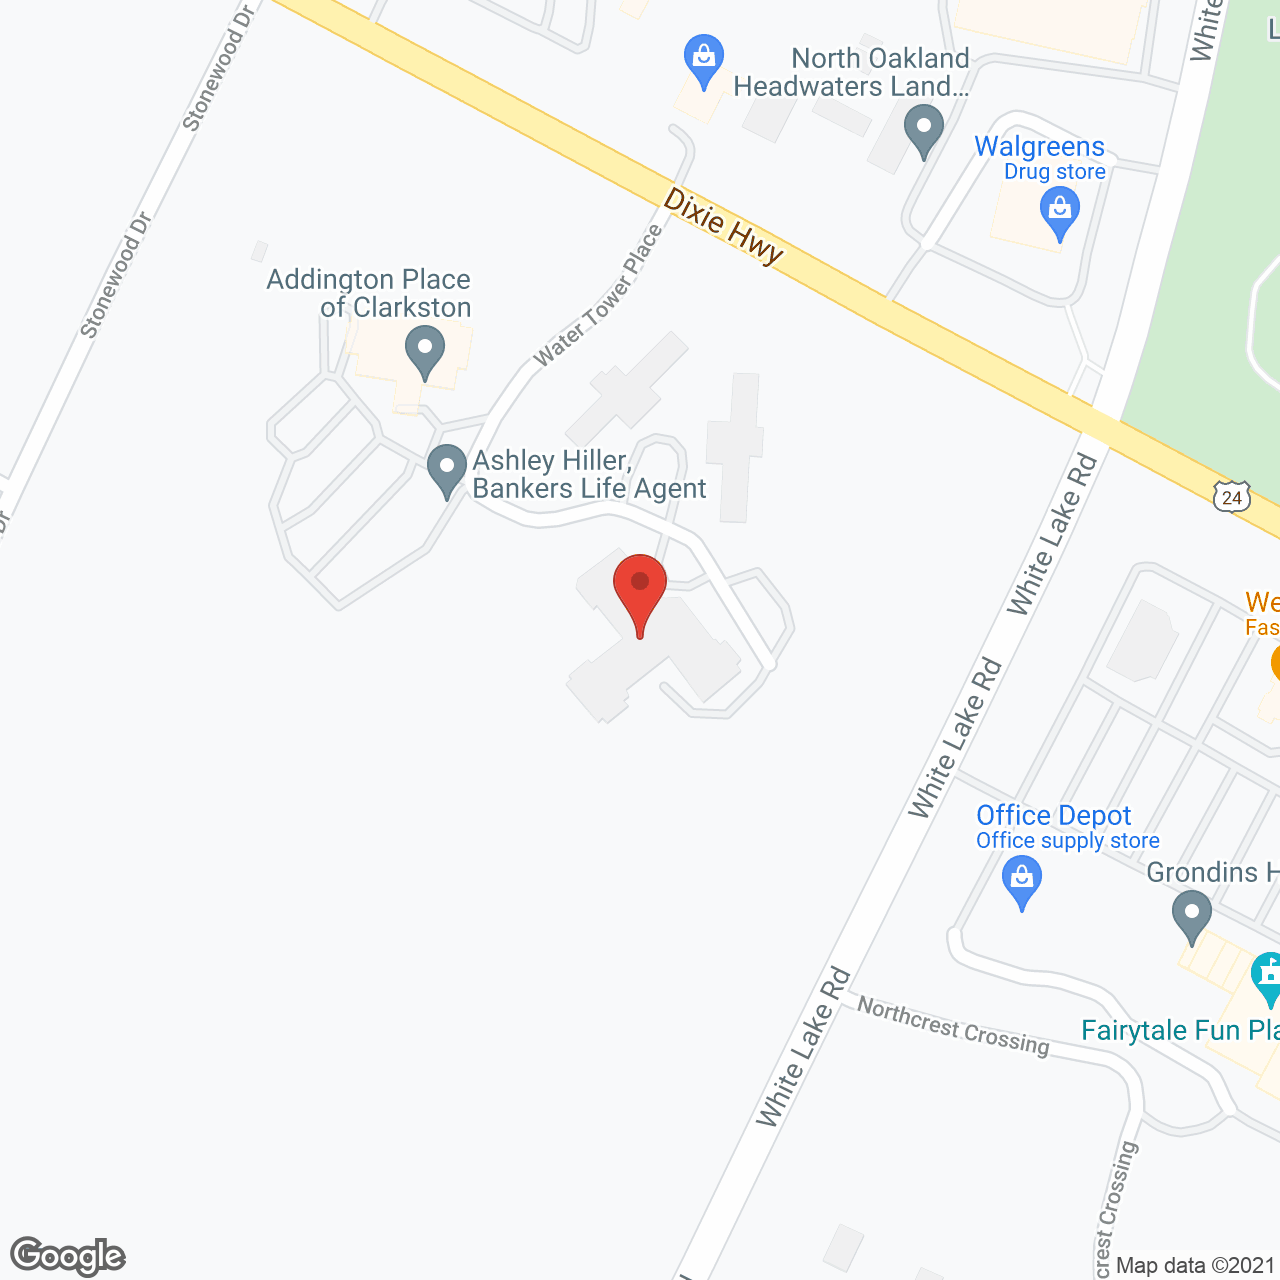 Addington Place of Clarkston in google map